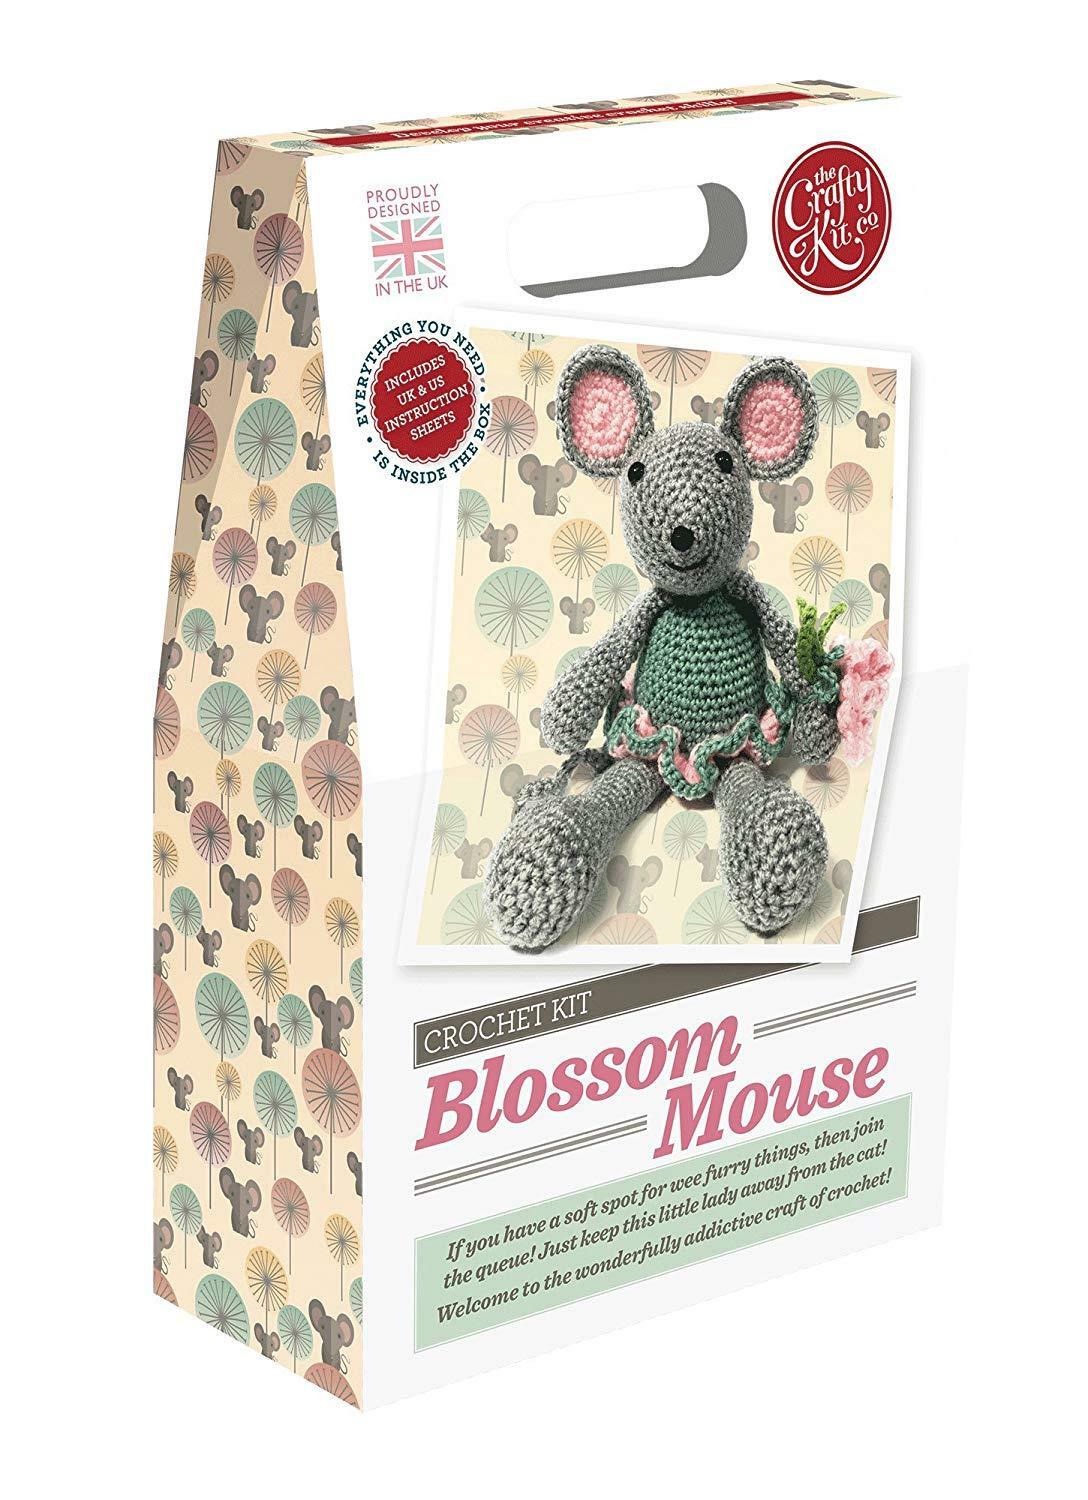 Craft Kit Company - Crochet Blossom Mouse